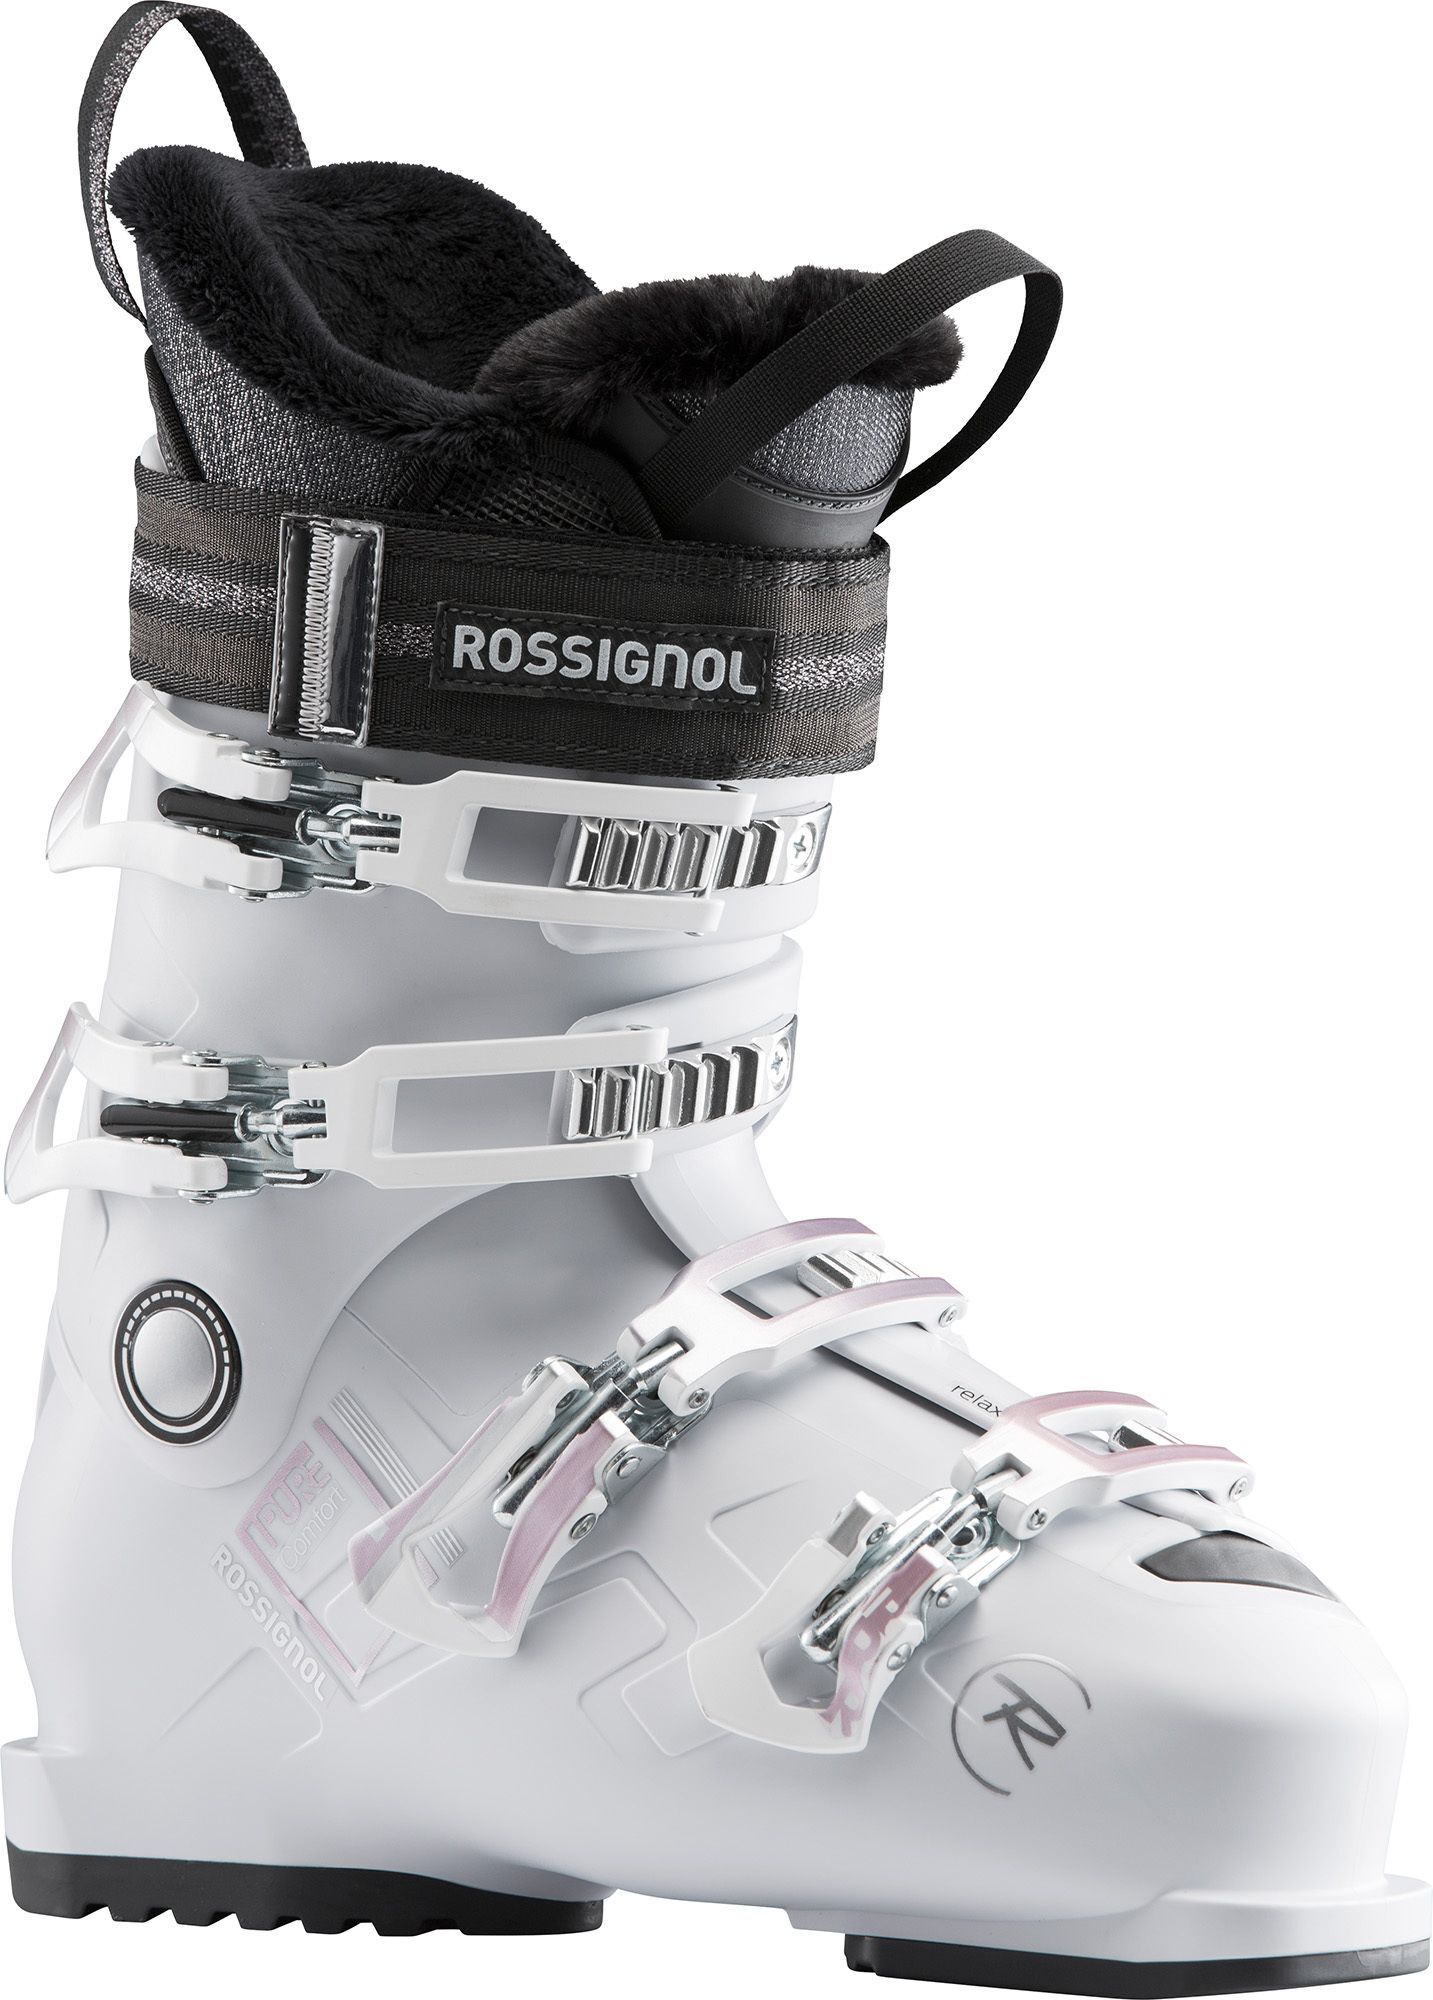 Rossignol ski cipele PURE COMFORT 60 - WHITE GREY